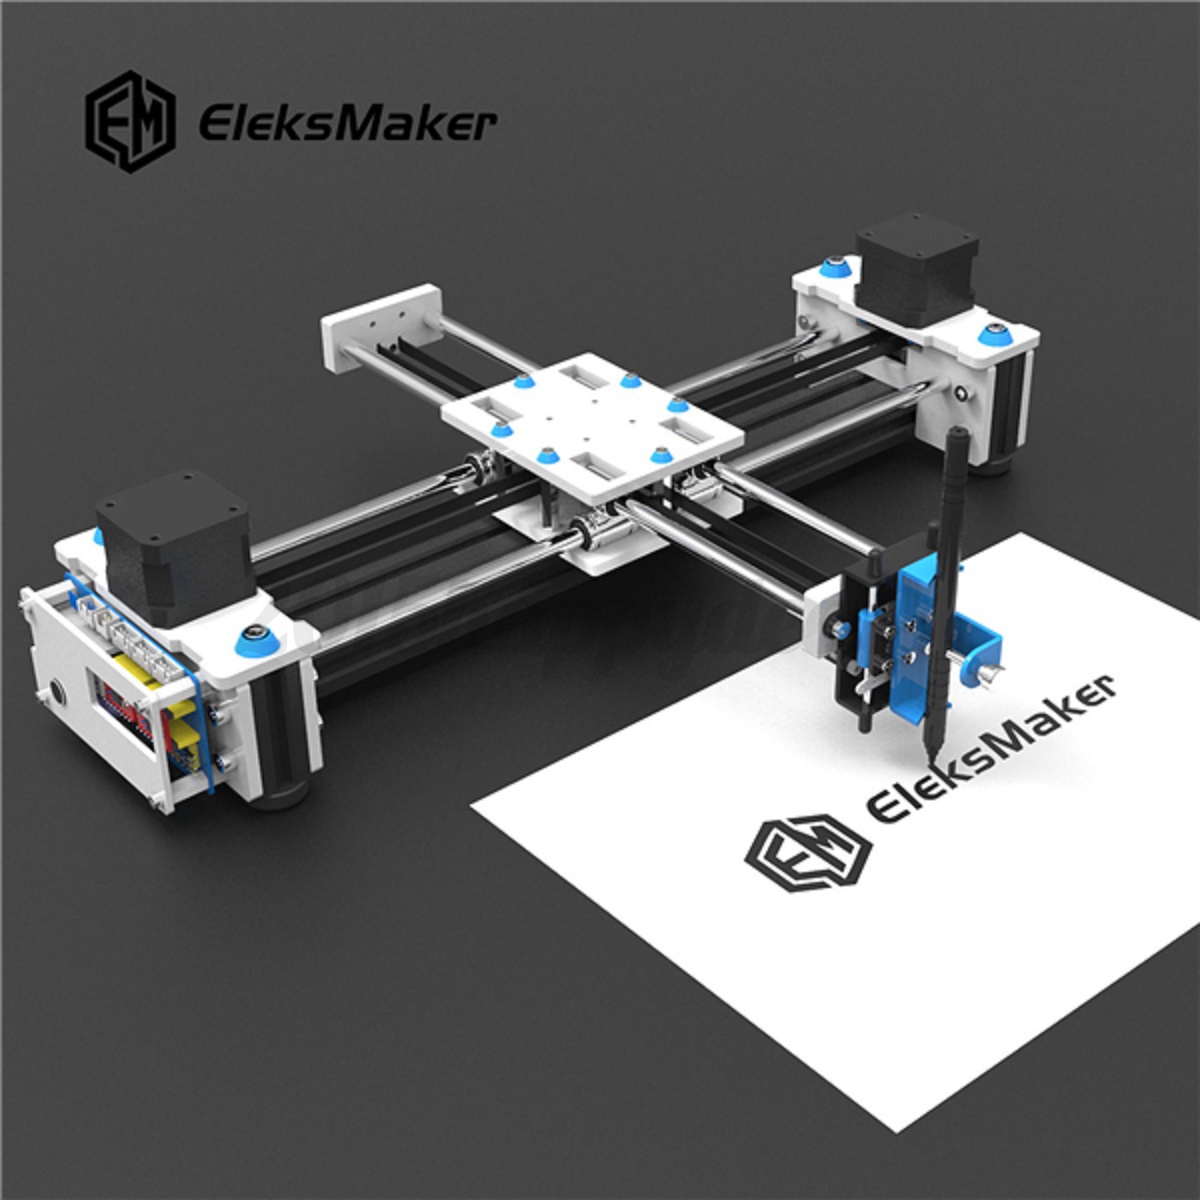 EleksMaker CNC Laser Printer Drawing Engraving Machine Module DIY 2500mW 28x20cm | eBay